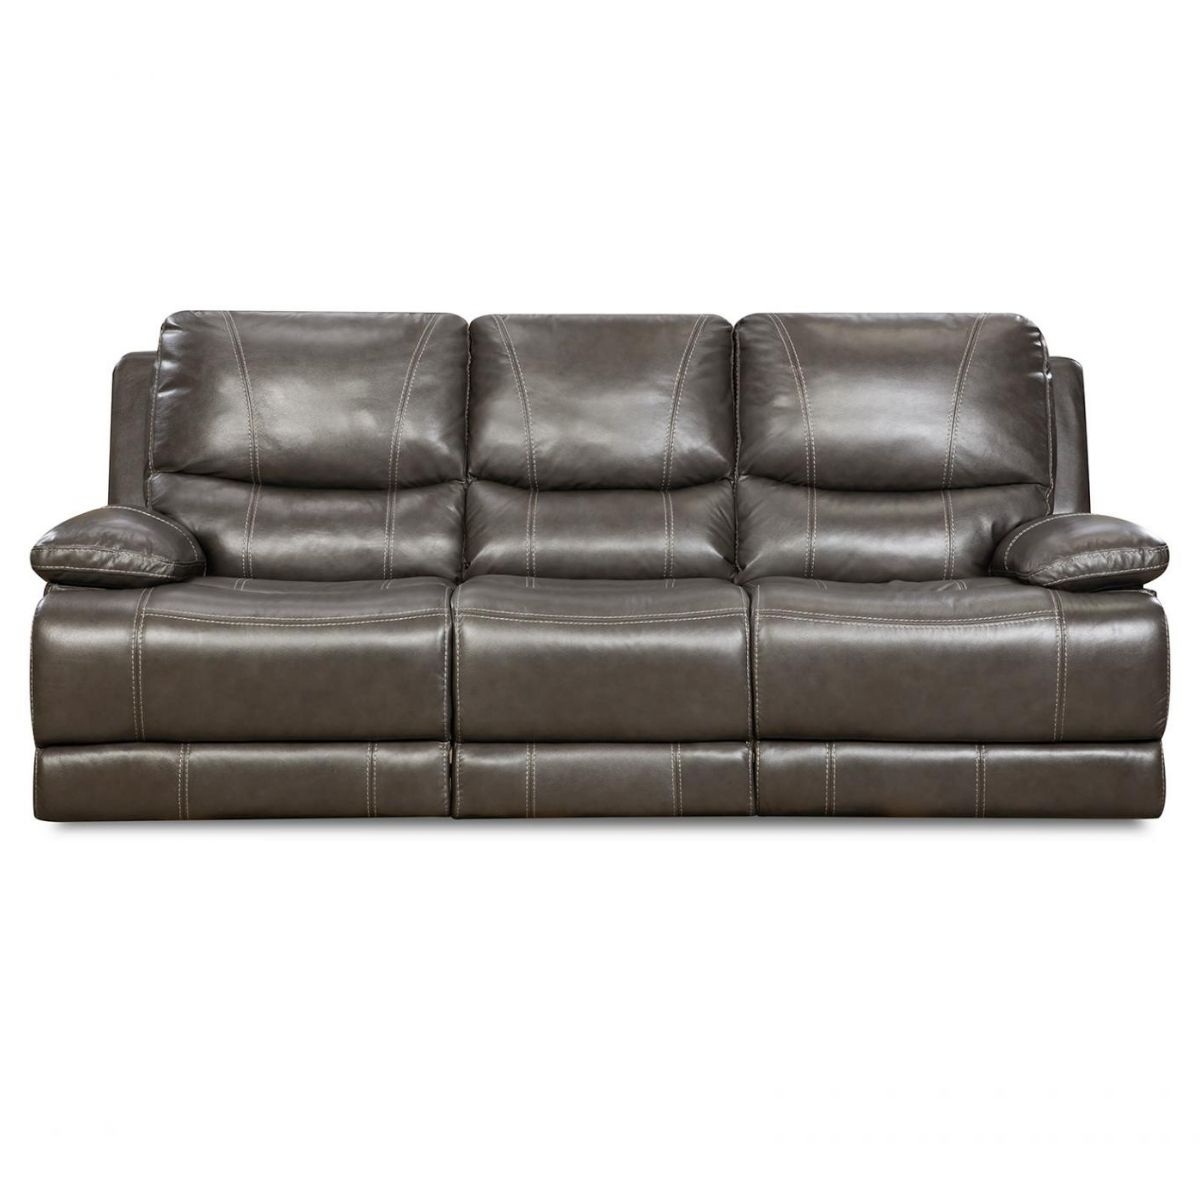 Corinthian Furniture Brooklyn Leather Reclining Sofa